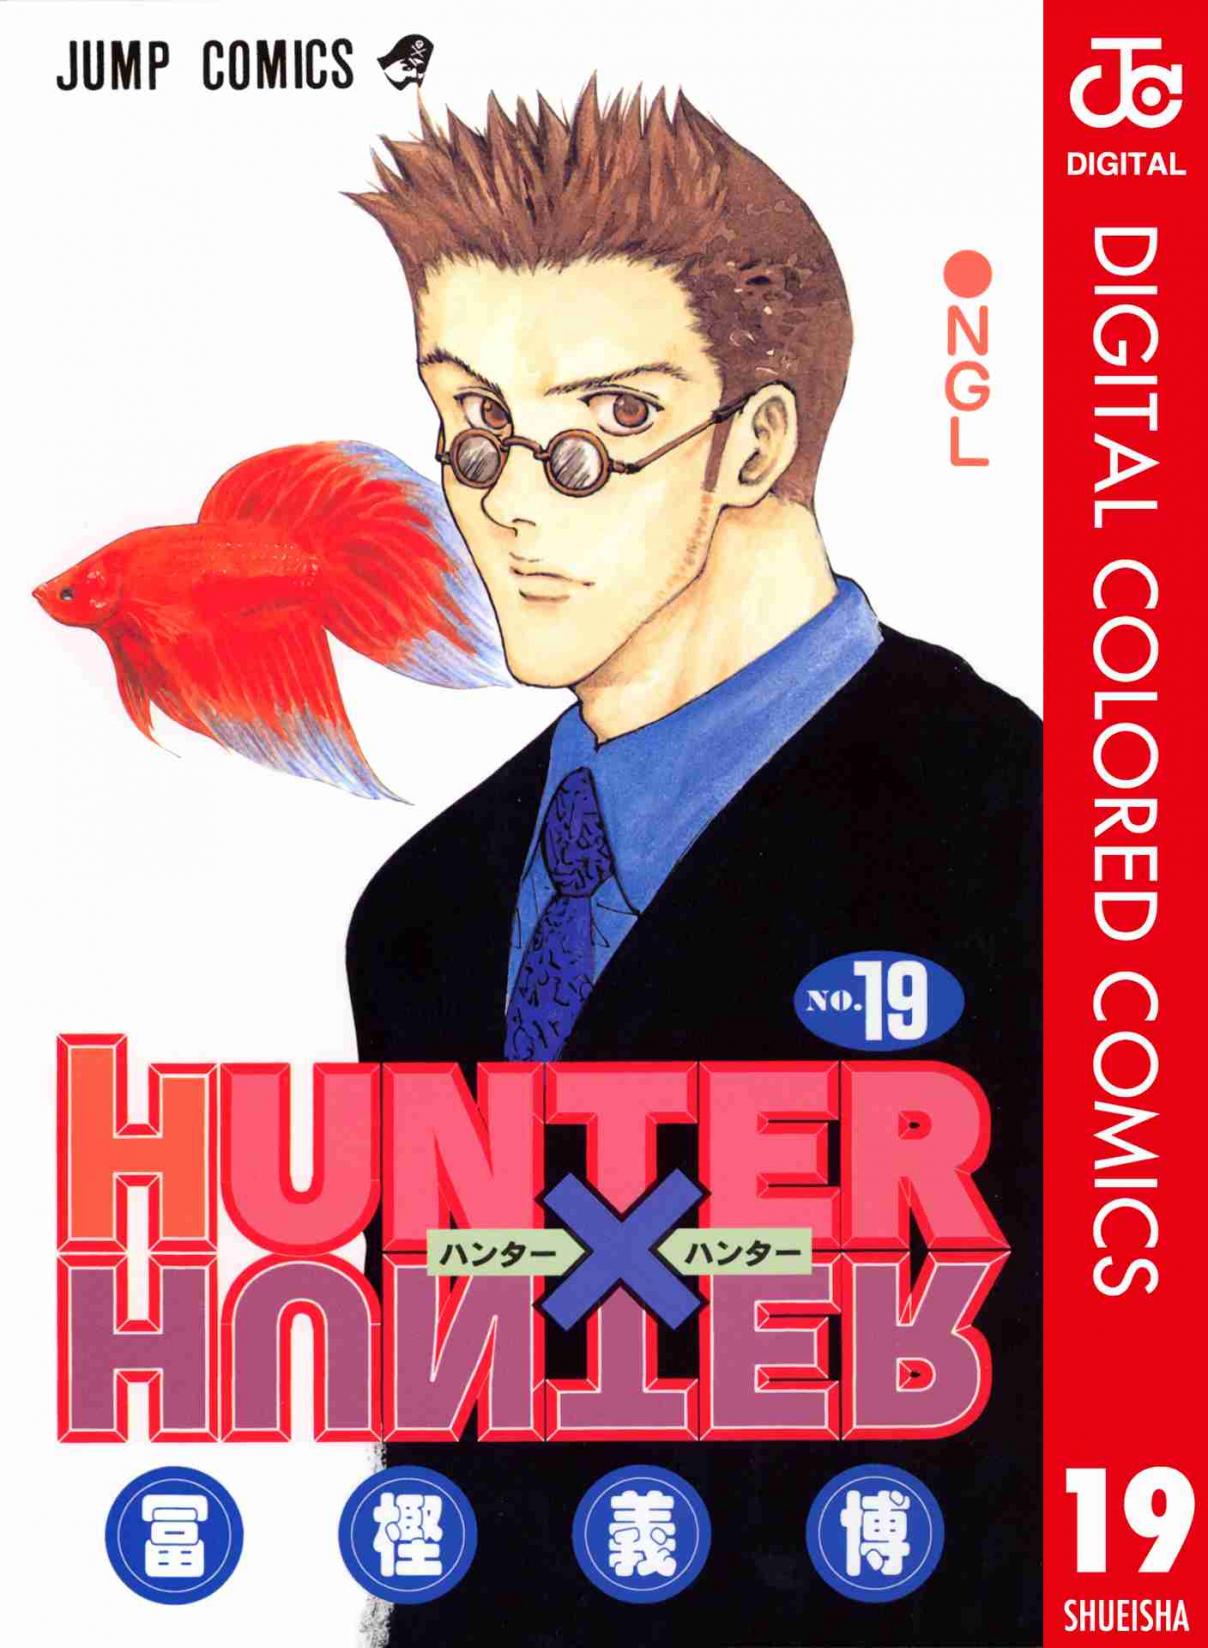 HUNTER x HUNTER - DIGITAL COLORED COMICS 188